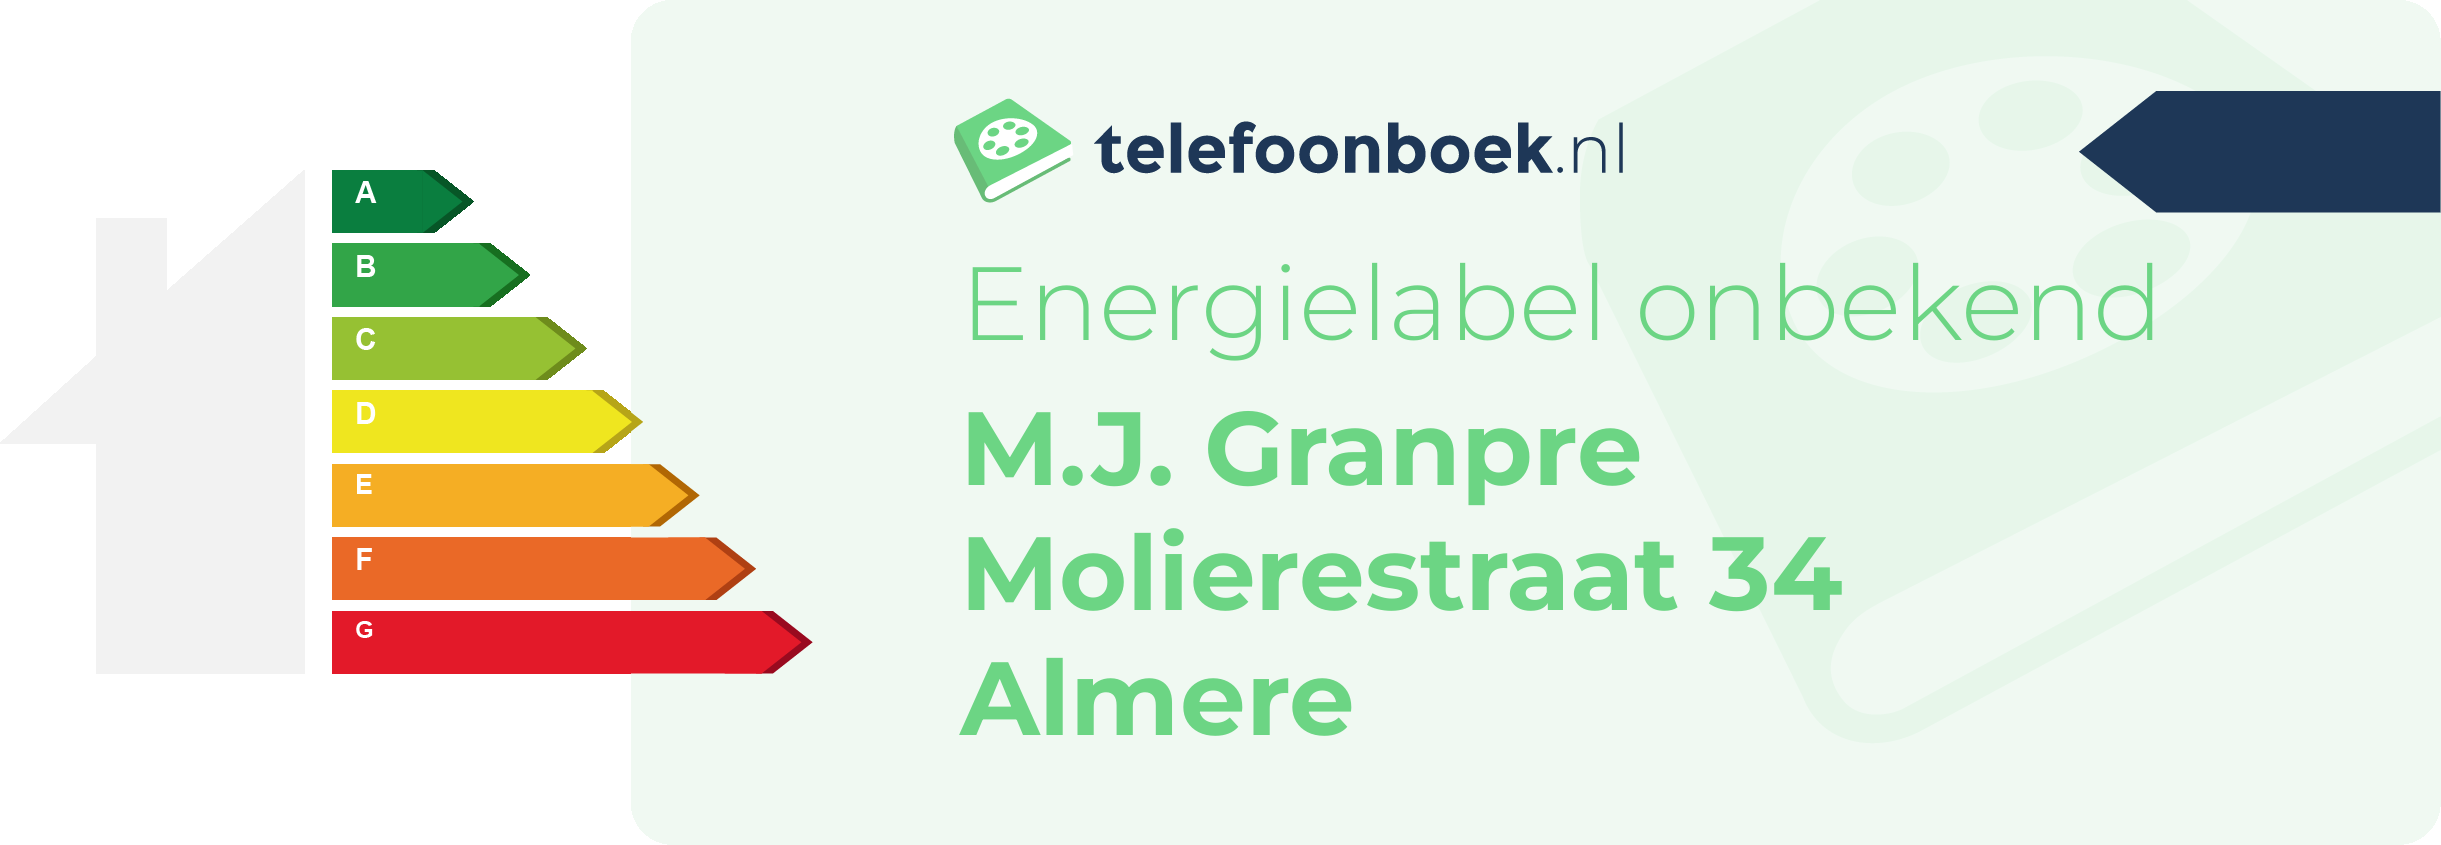 Energielabel M.J. Granpre Molierestraat 34 Almere